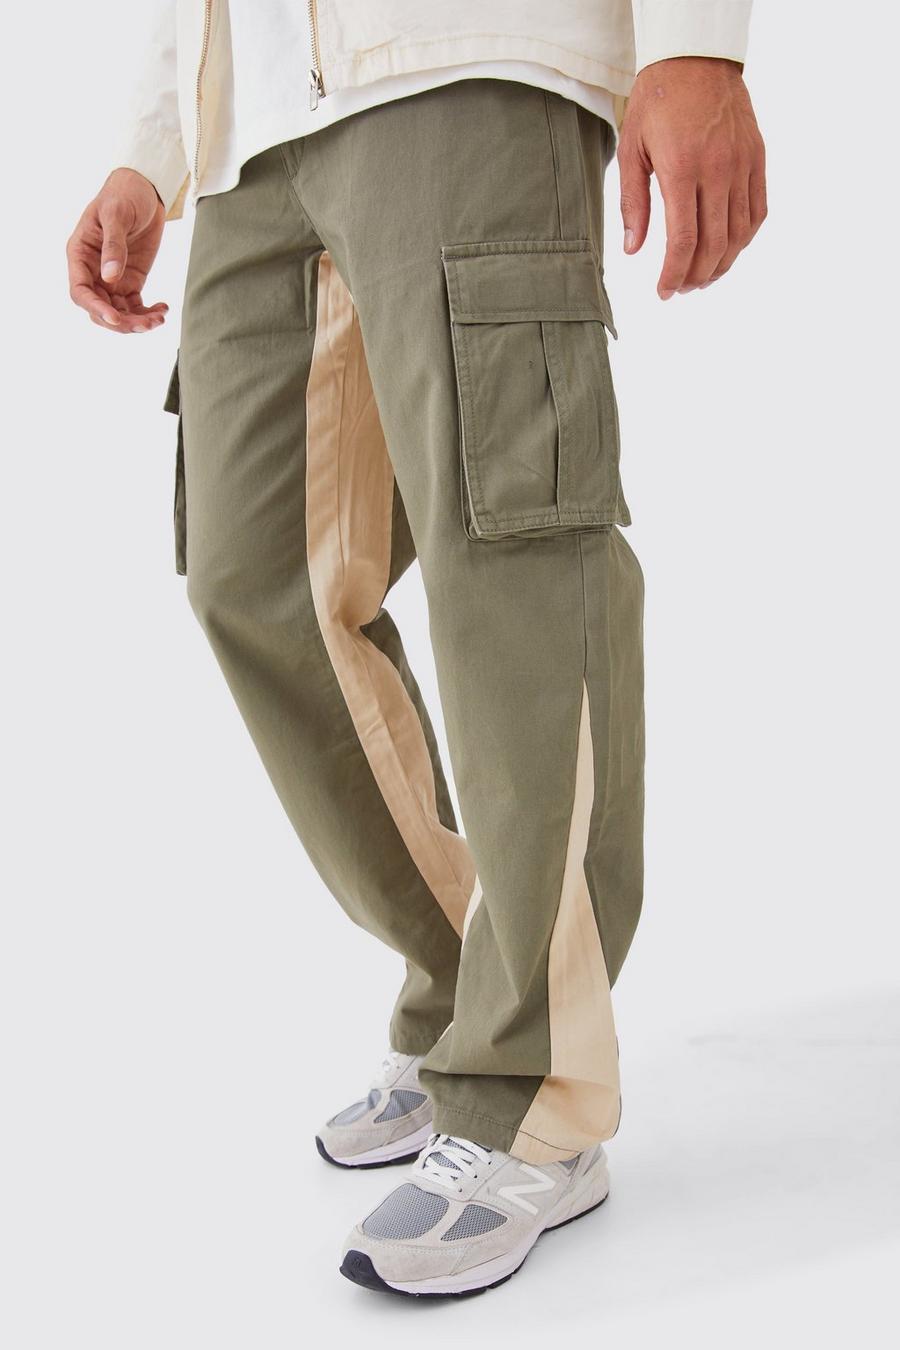 Men's Pants, Trousers & Slacks for Men